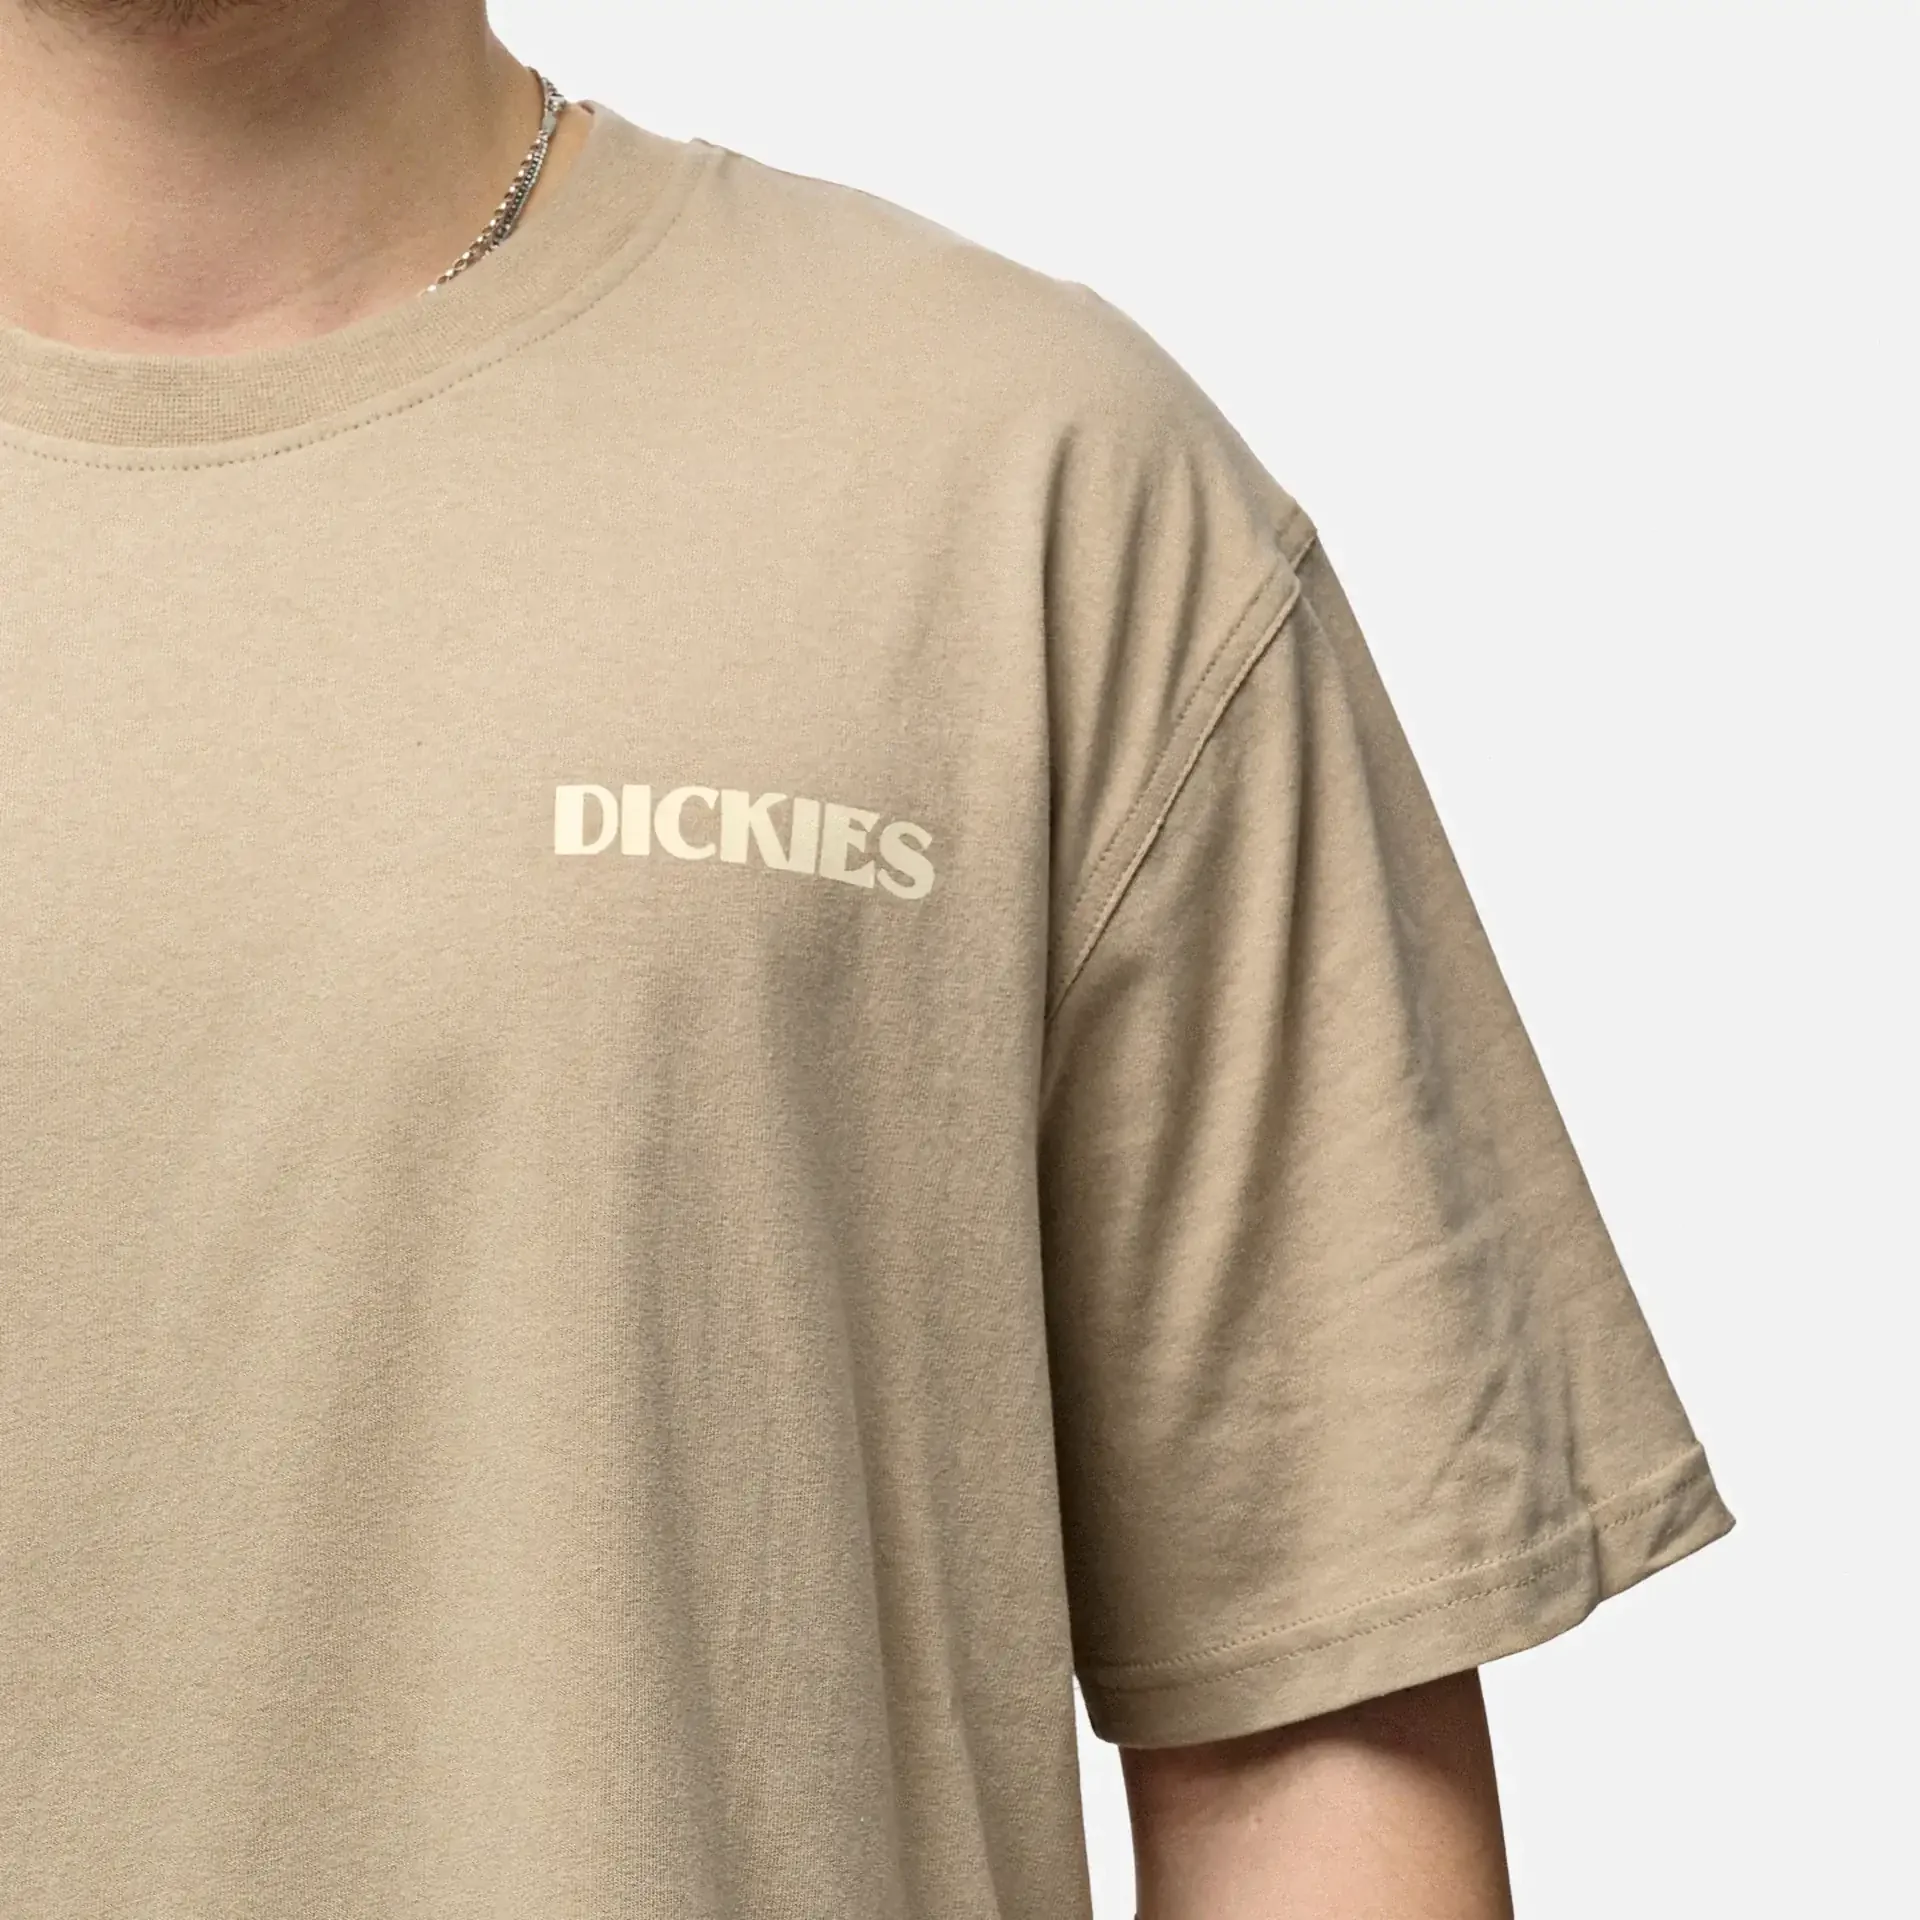 Dickies Herndon T-Shirt Sandstone